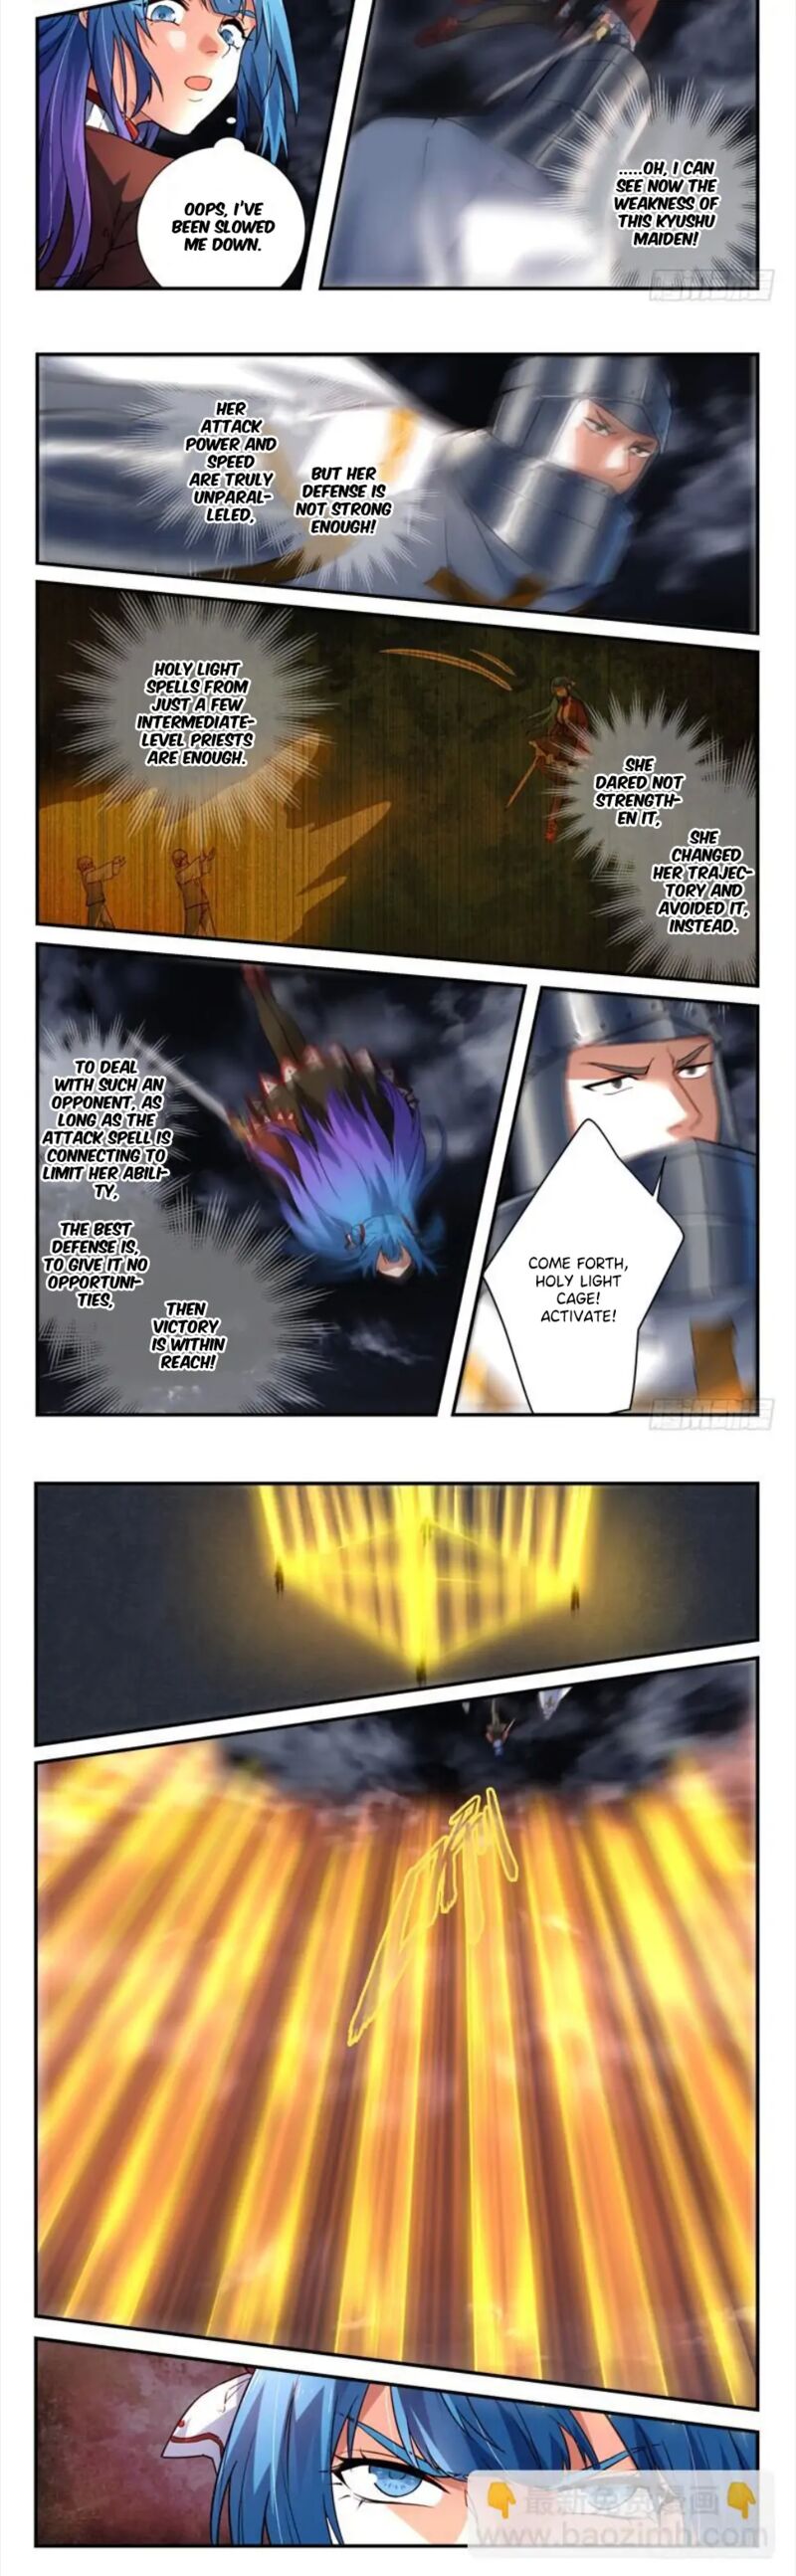 Spirit Blade Mountain Chapter 498 Page 4